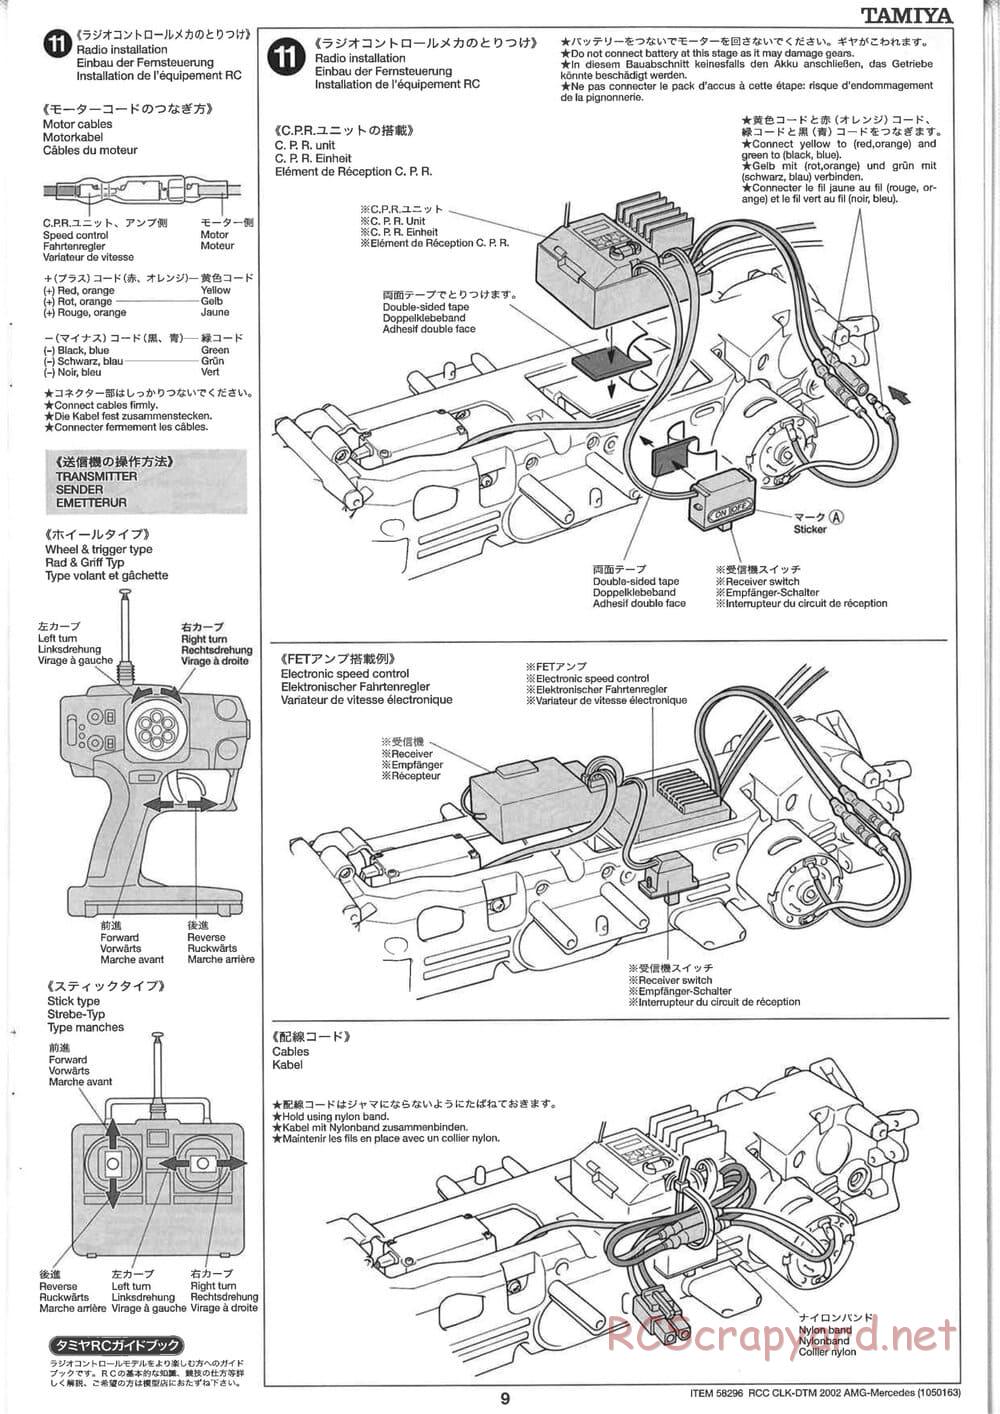 Tamiya - CLK DTM 2002 AMG Mercedes - TL-01 LA Chassis - Manual - Page 9